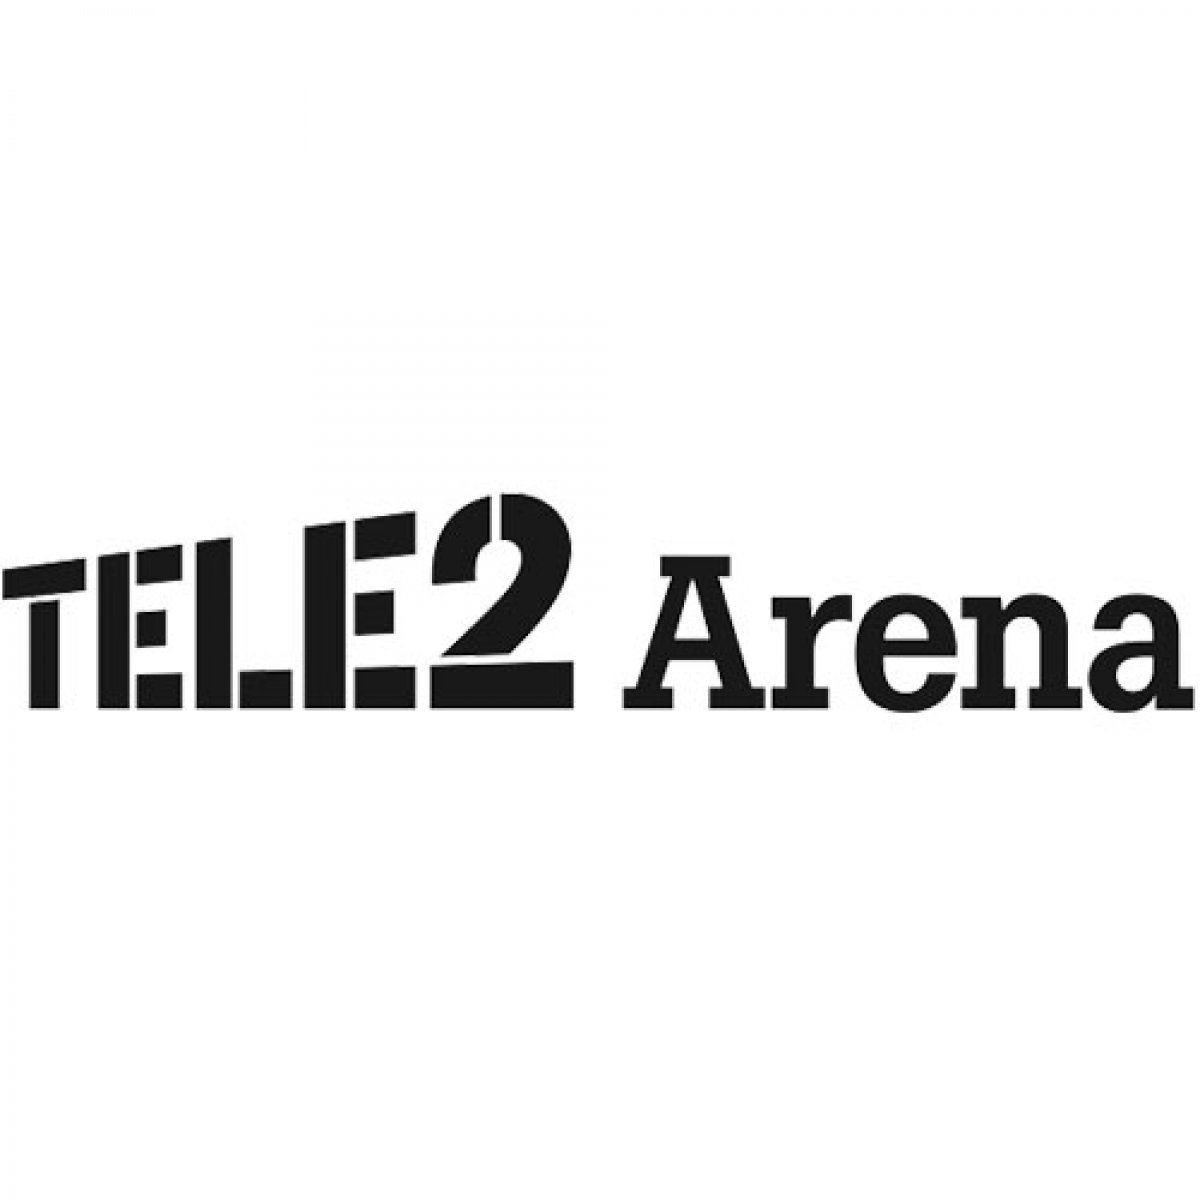 Tele2 Arena Logo